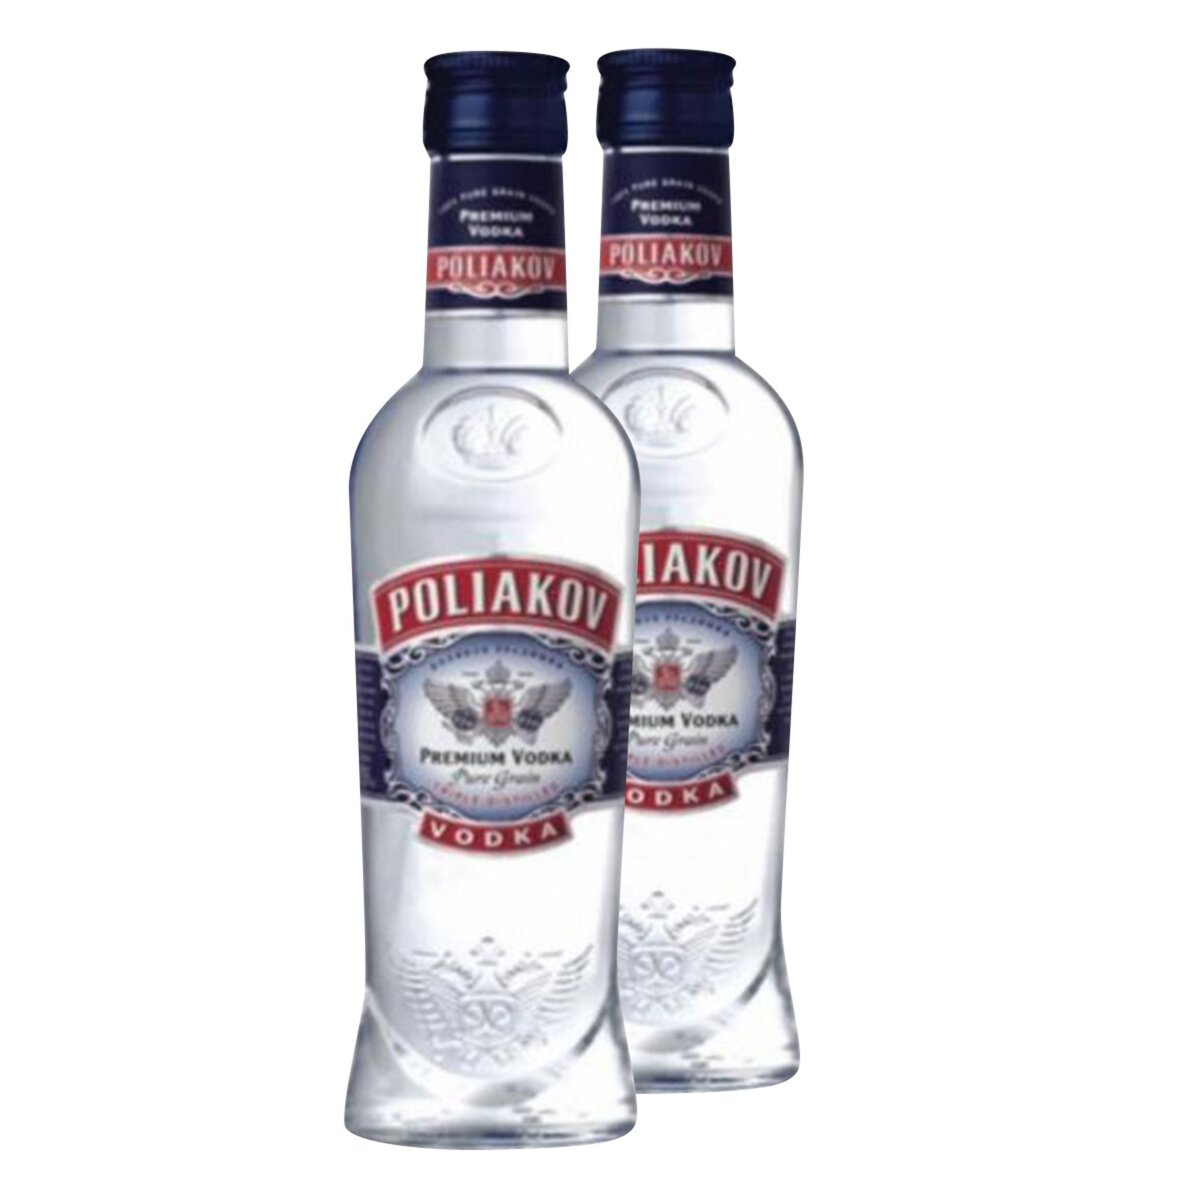 Poliakov Vodka 37.5% - 2 litre